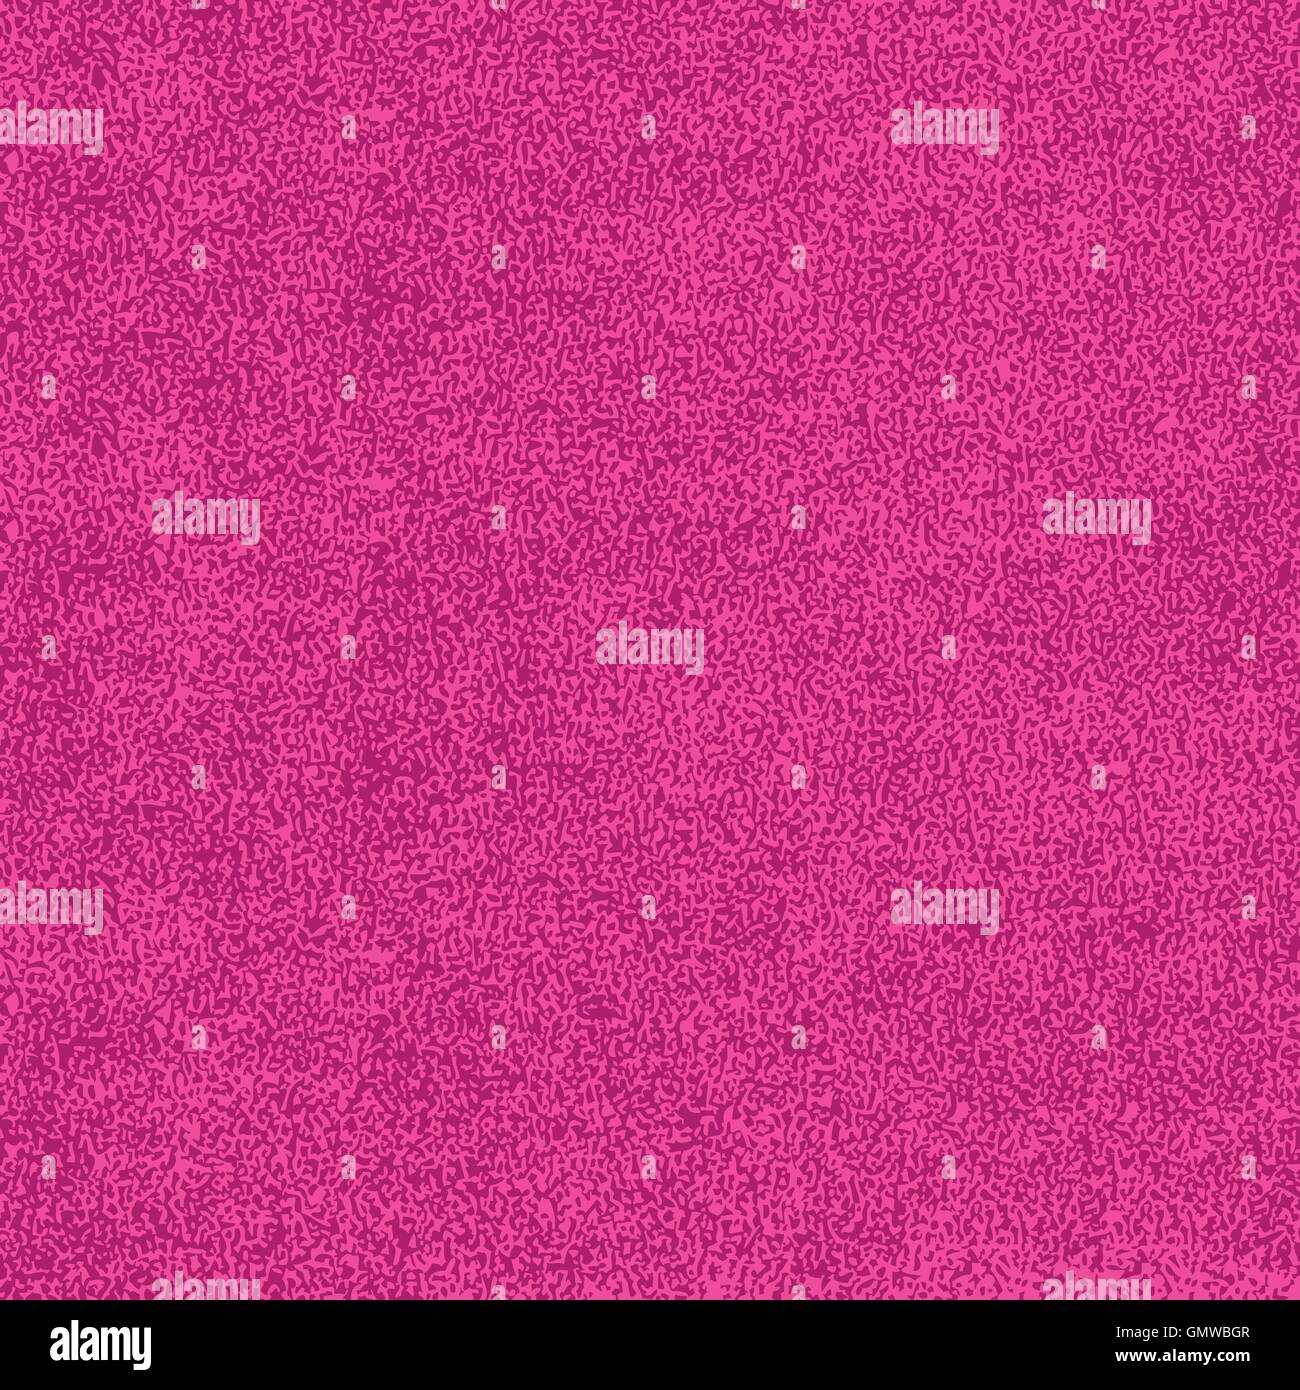 Download 910 Koleksi Background Pink Texture HD Terbaru